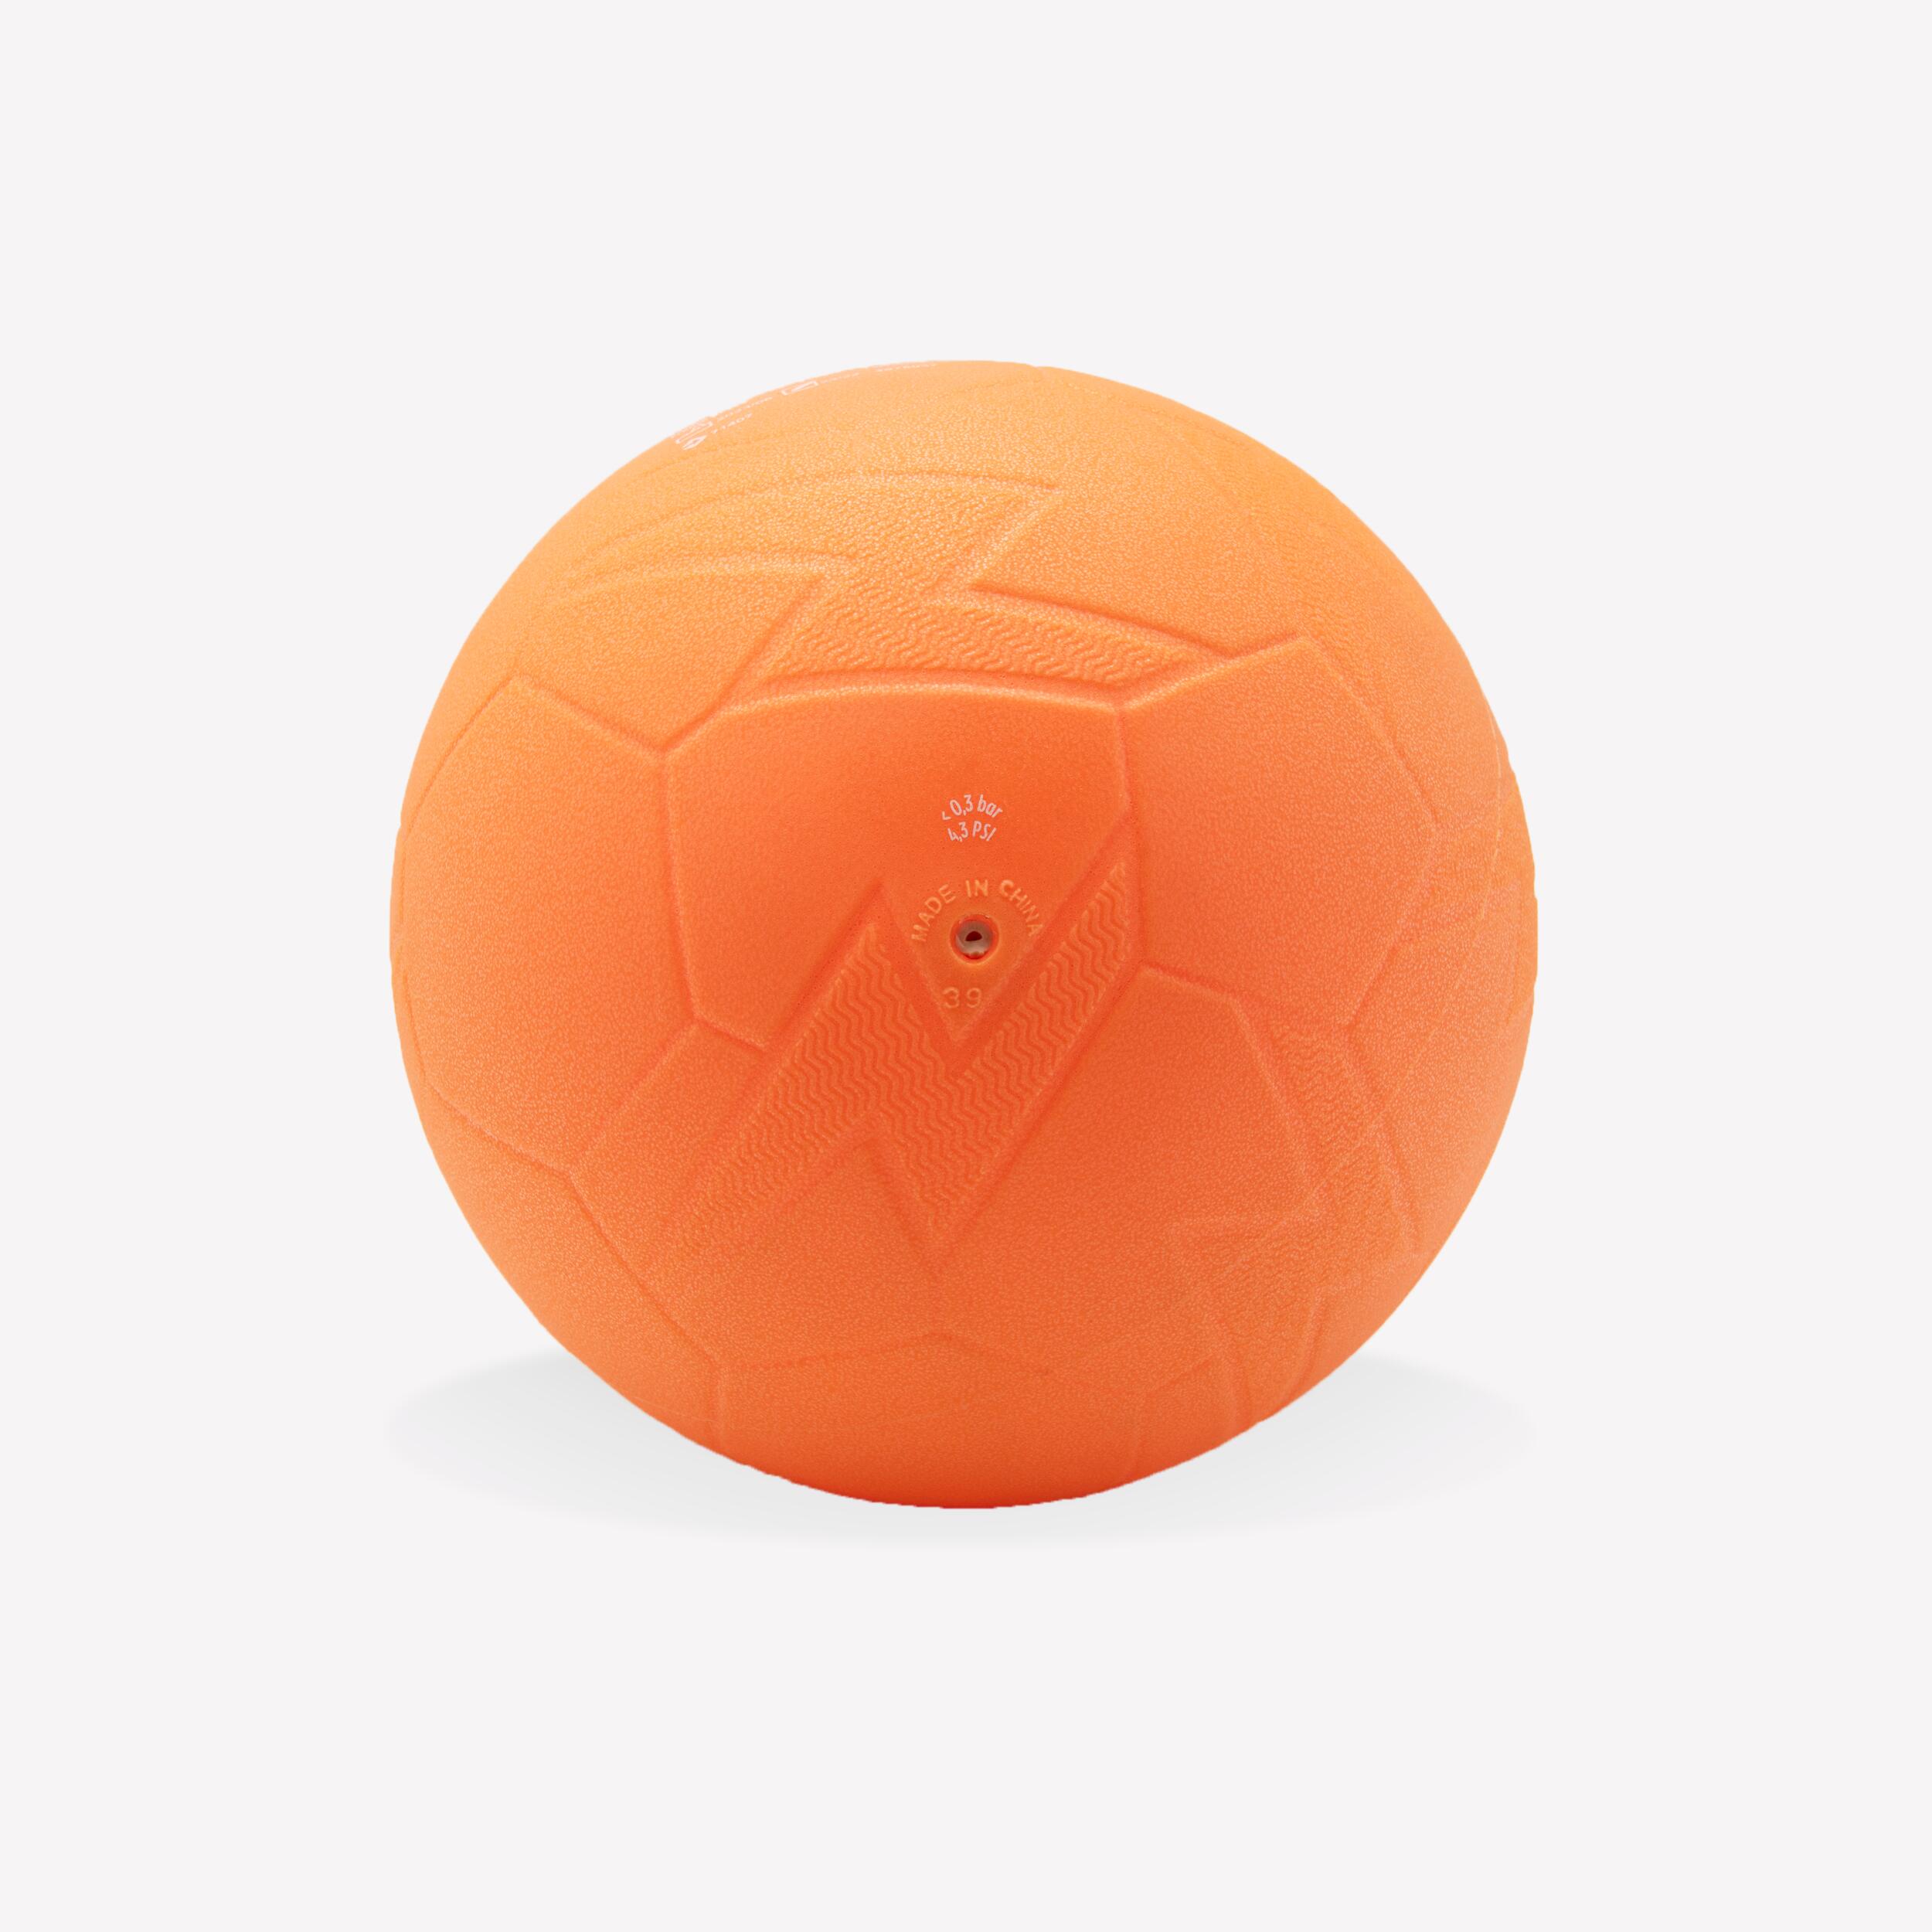 Size 0 Beginner's PVC Handball H100 Soft - Orange 2/2